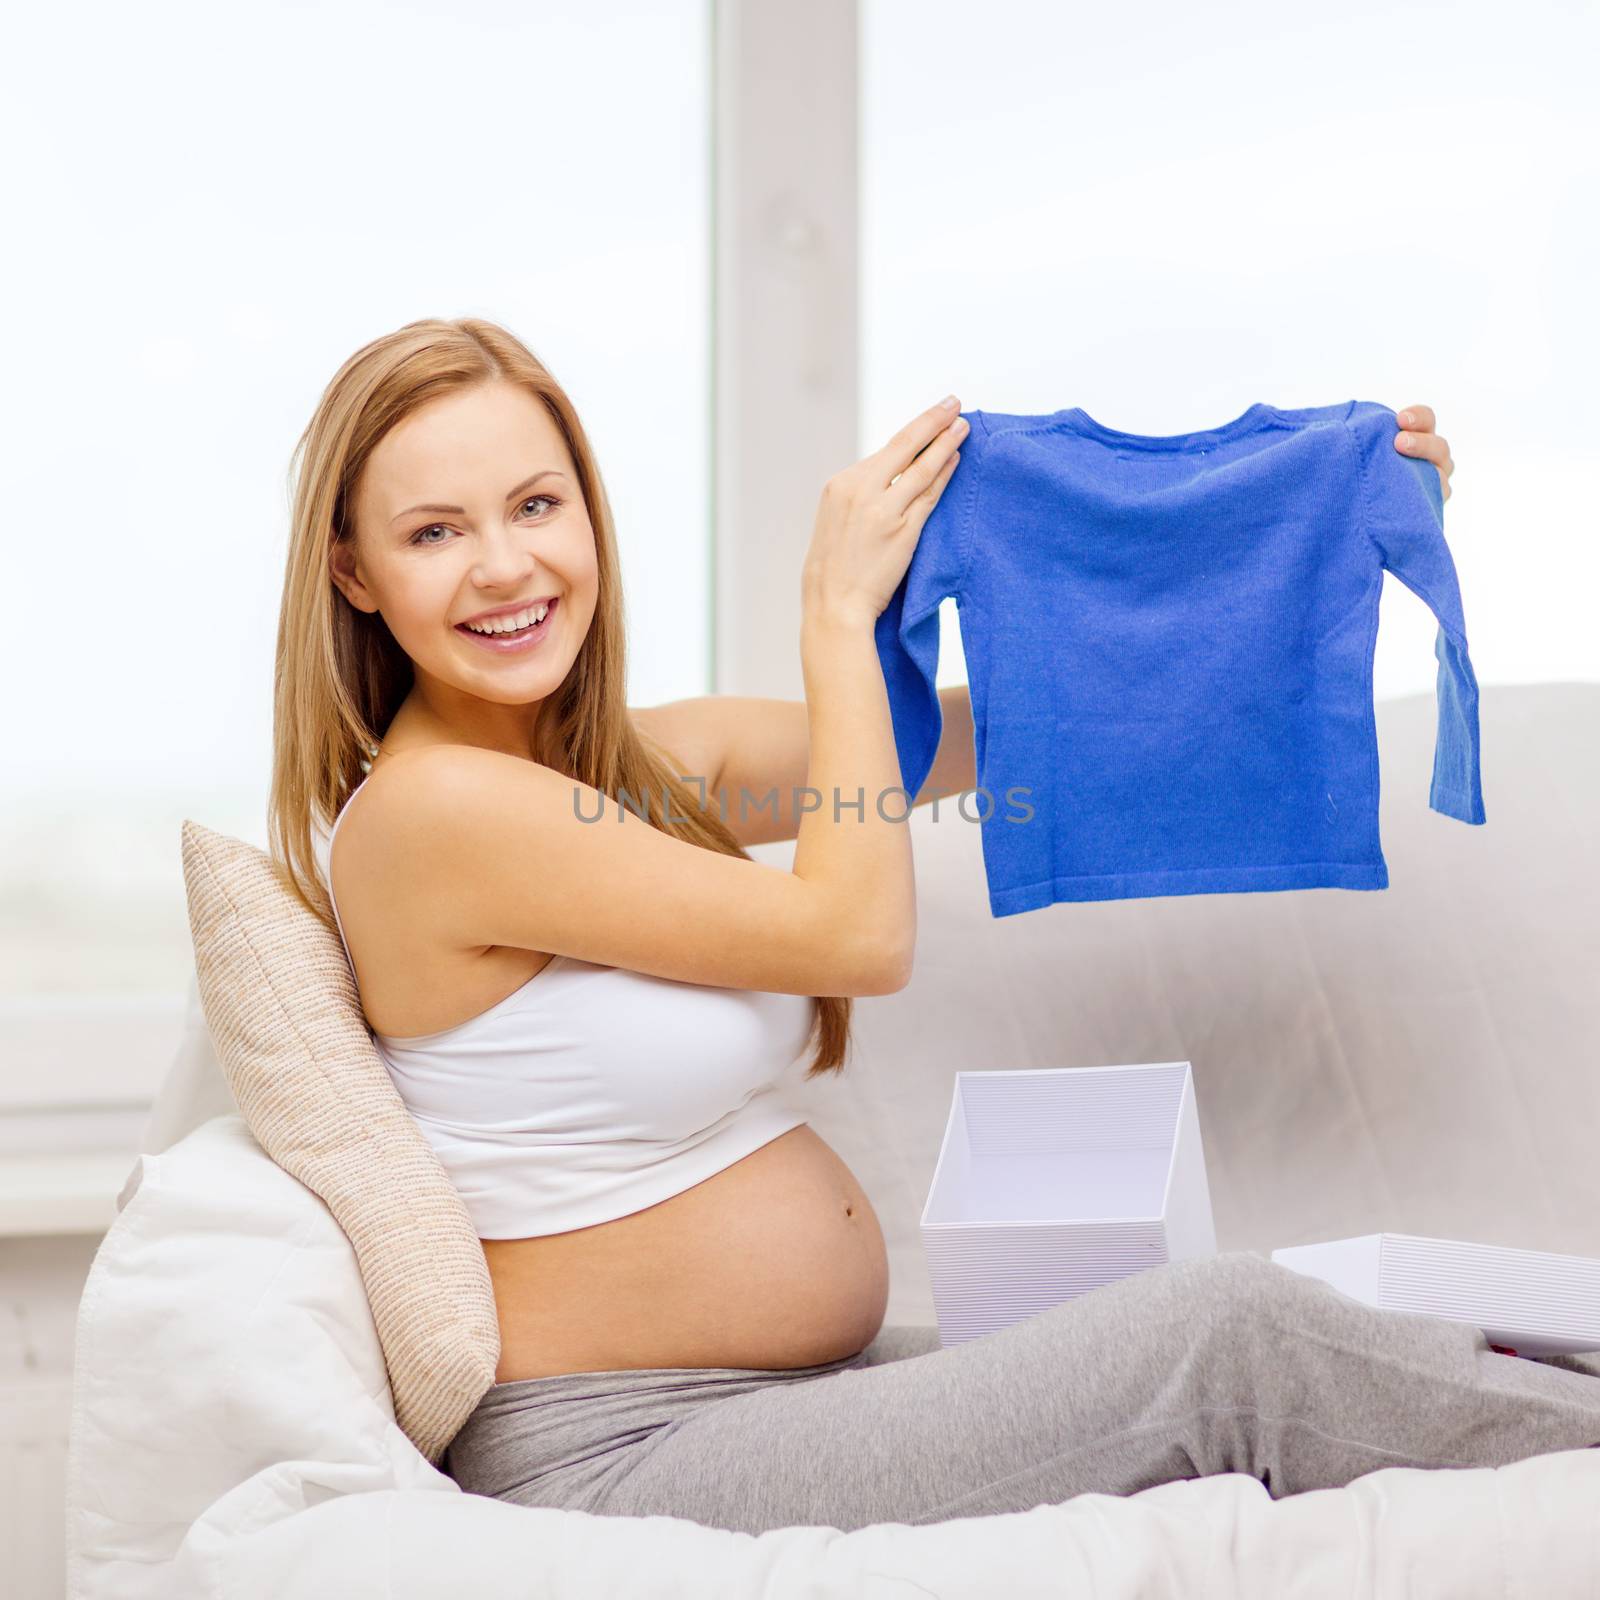 smiling pregnant woman opening gift box by dolgachov